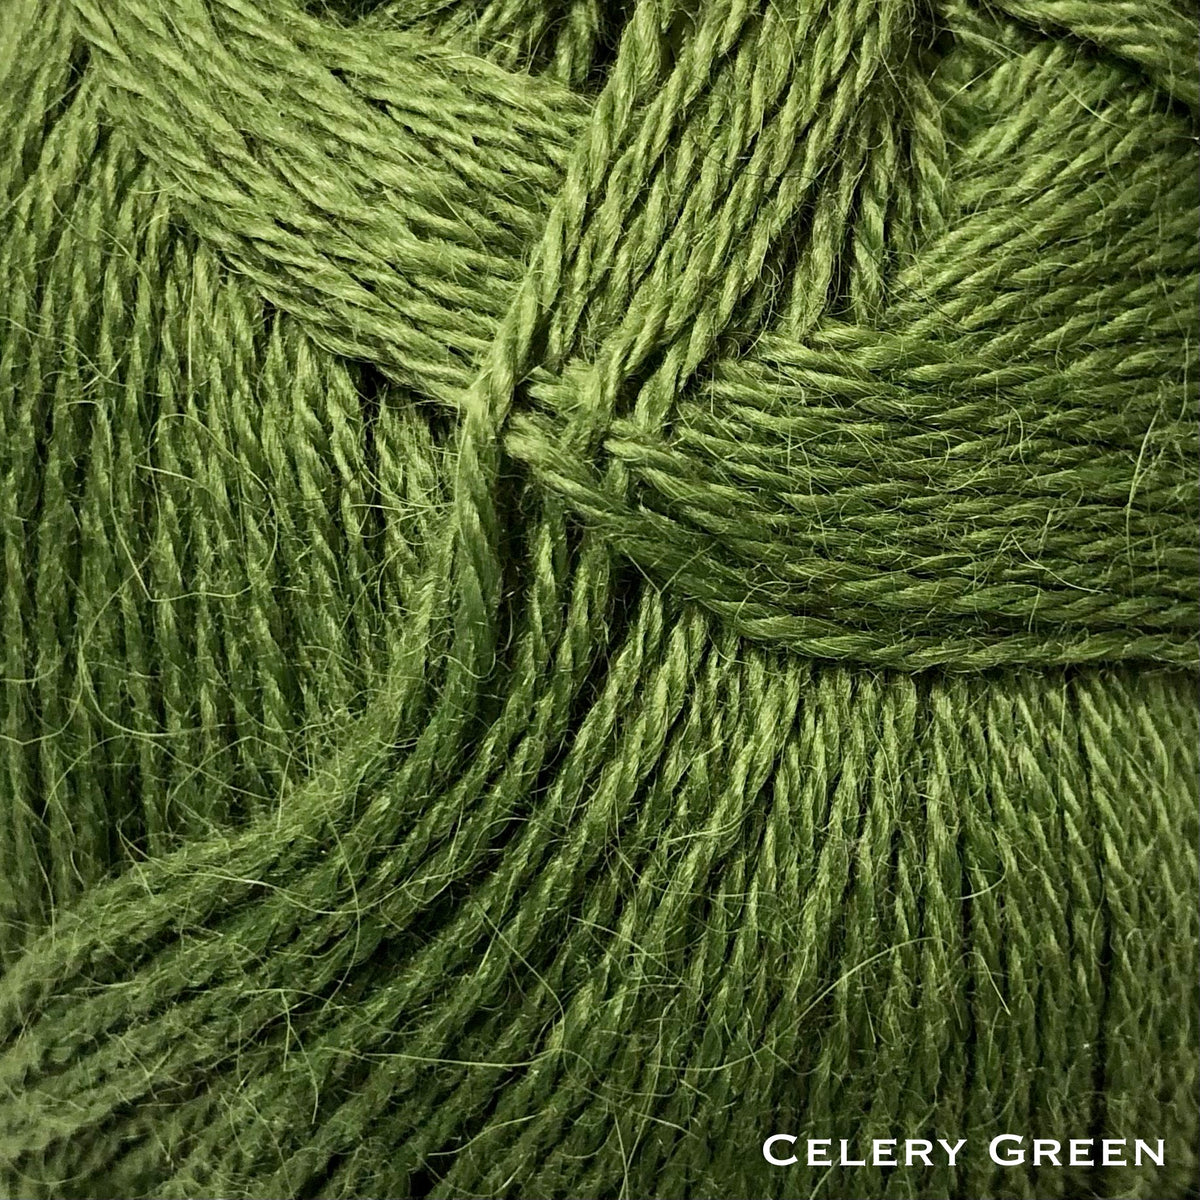 celery green sport weight alpaca wool yarn for knitting and crochet